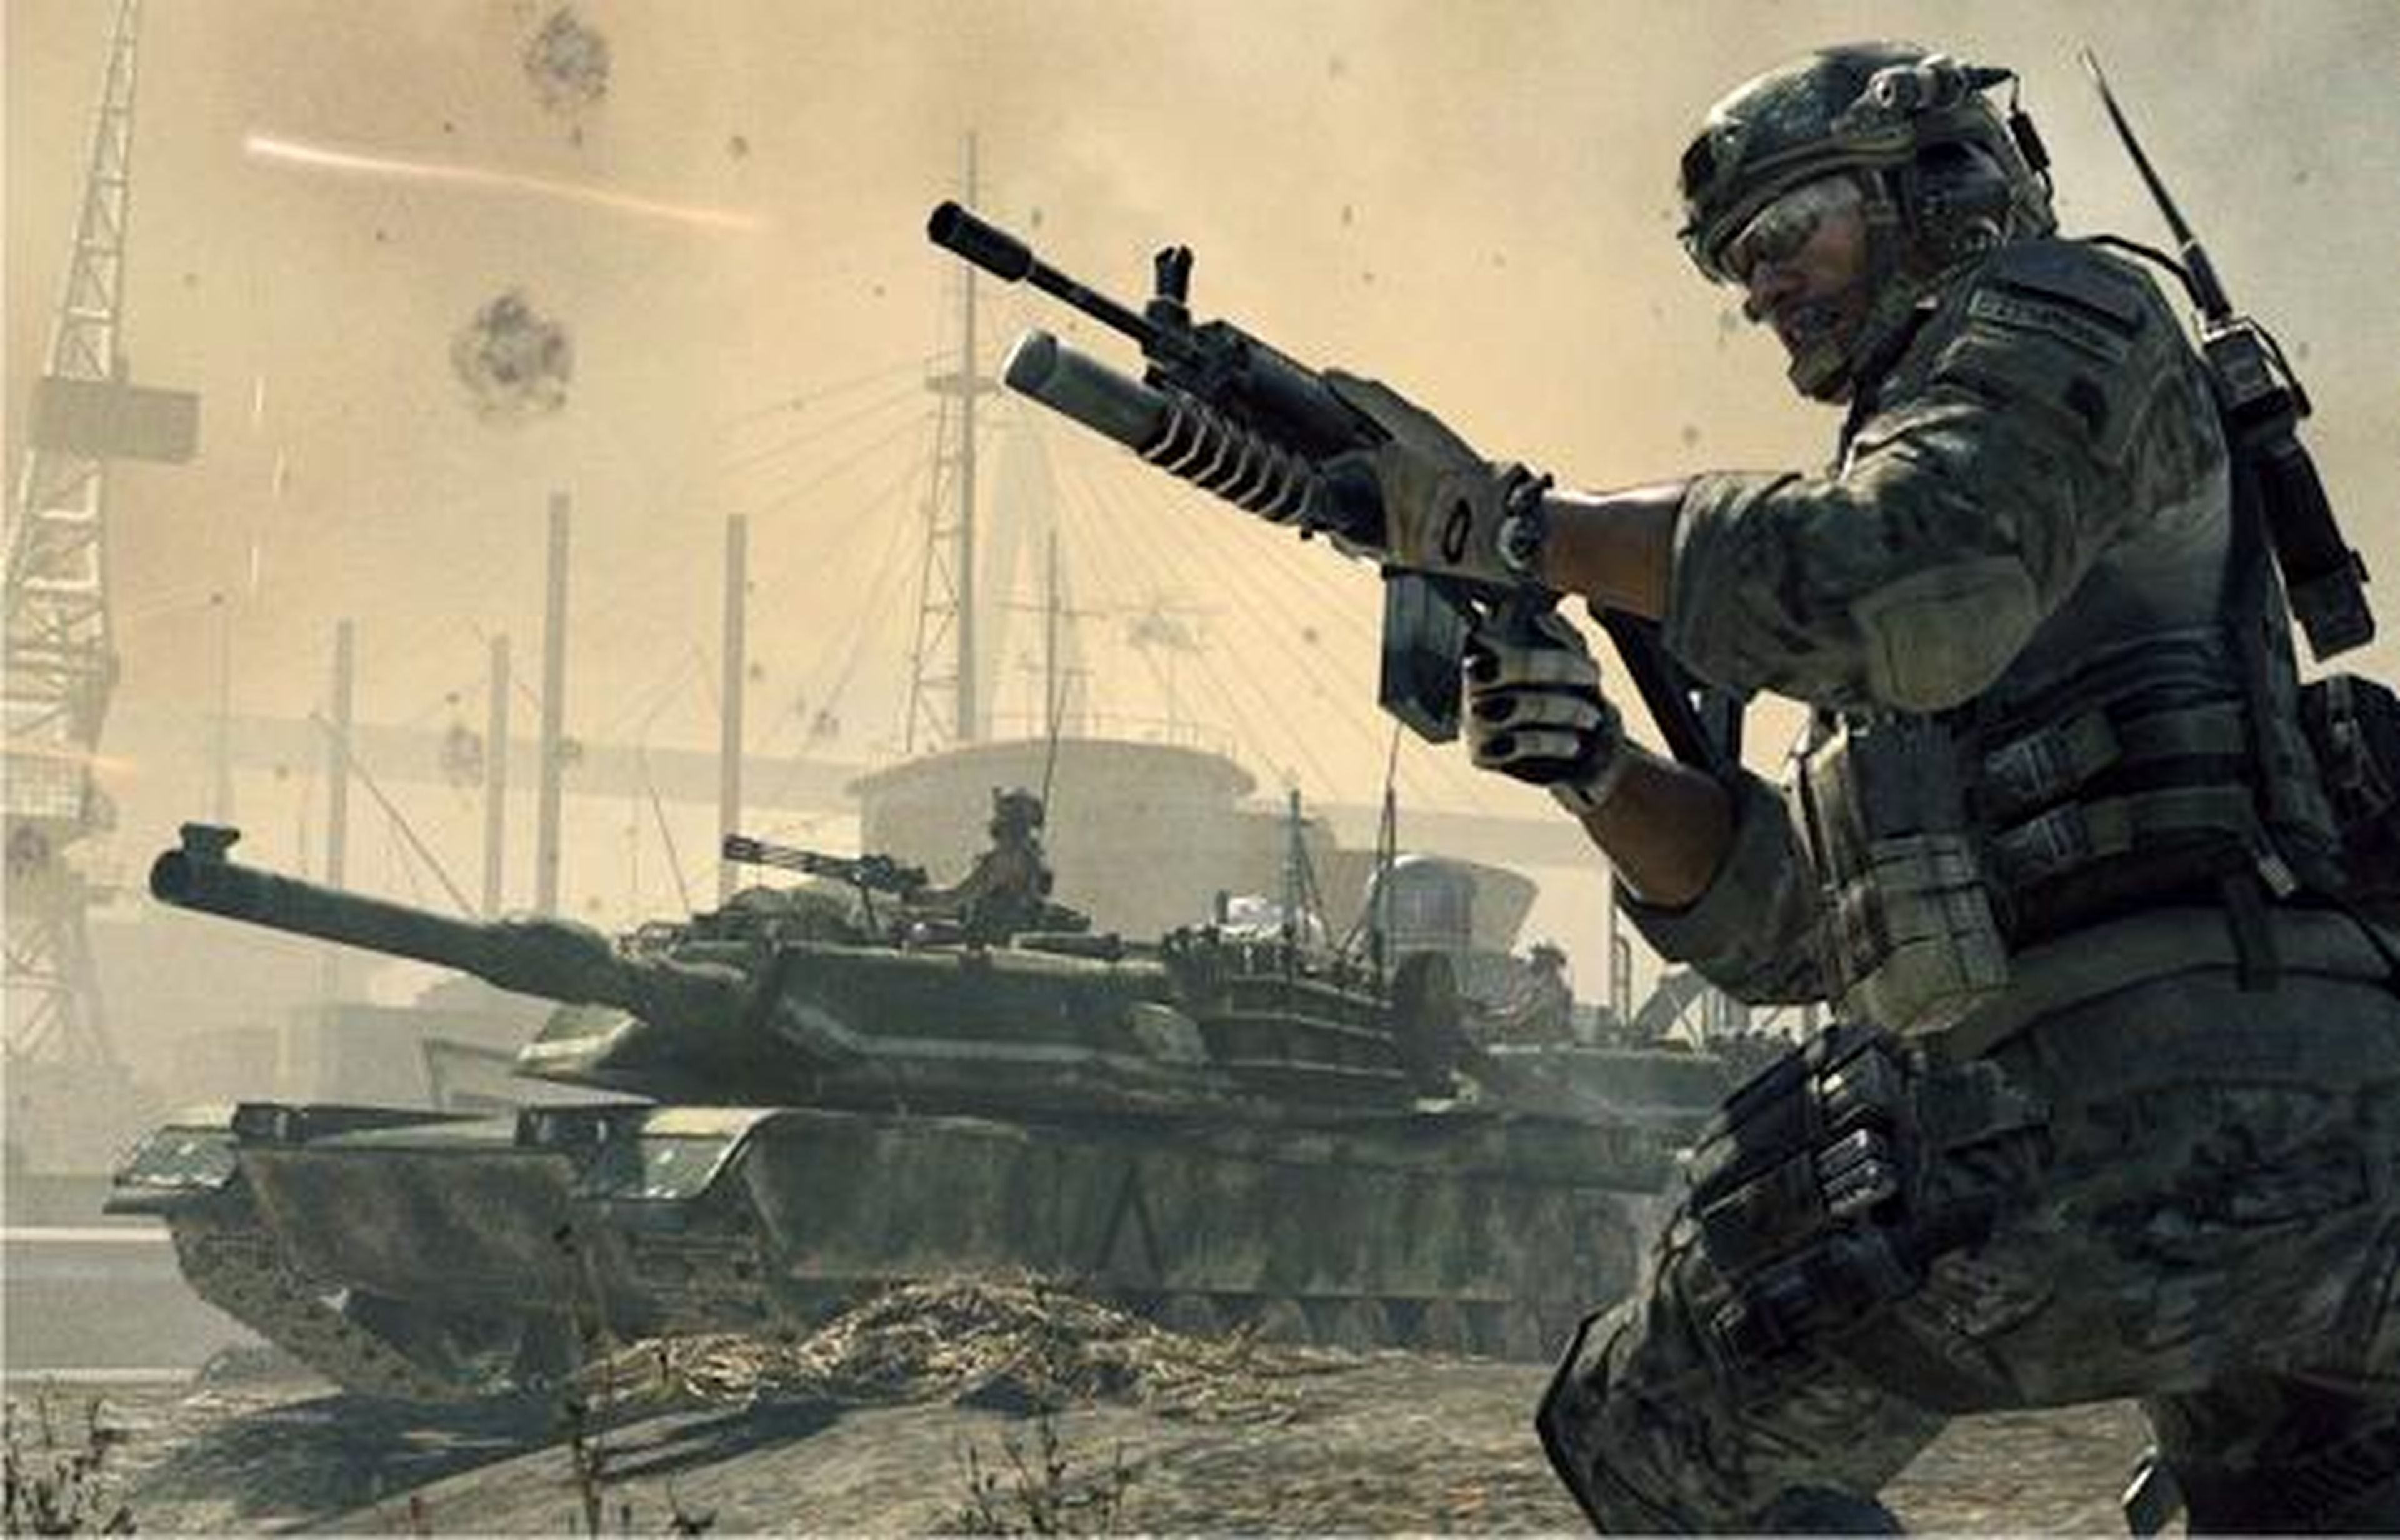 2011 — "Call of Duty: Modern Warfare 3" (PlayStation 3, Xbox 360, Nintendo Wii, PC, MacOS)